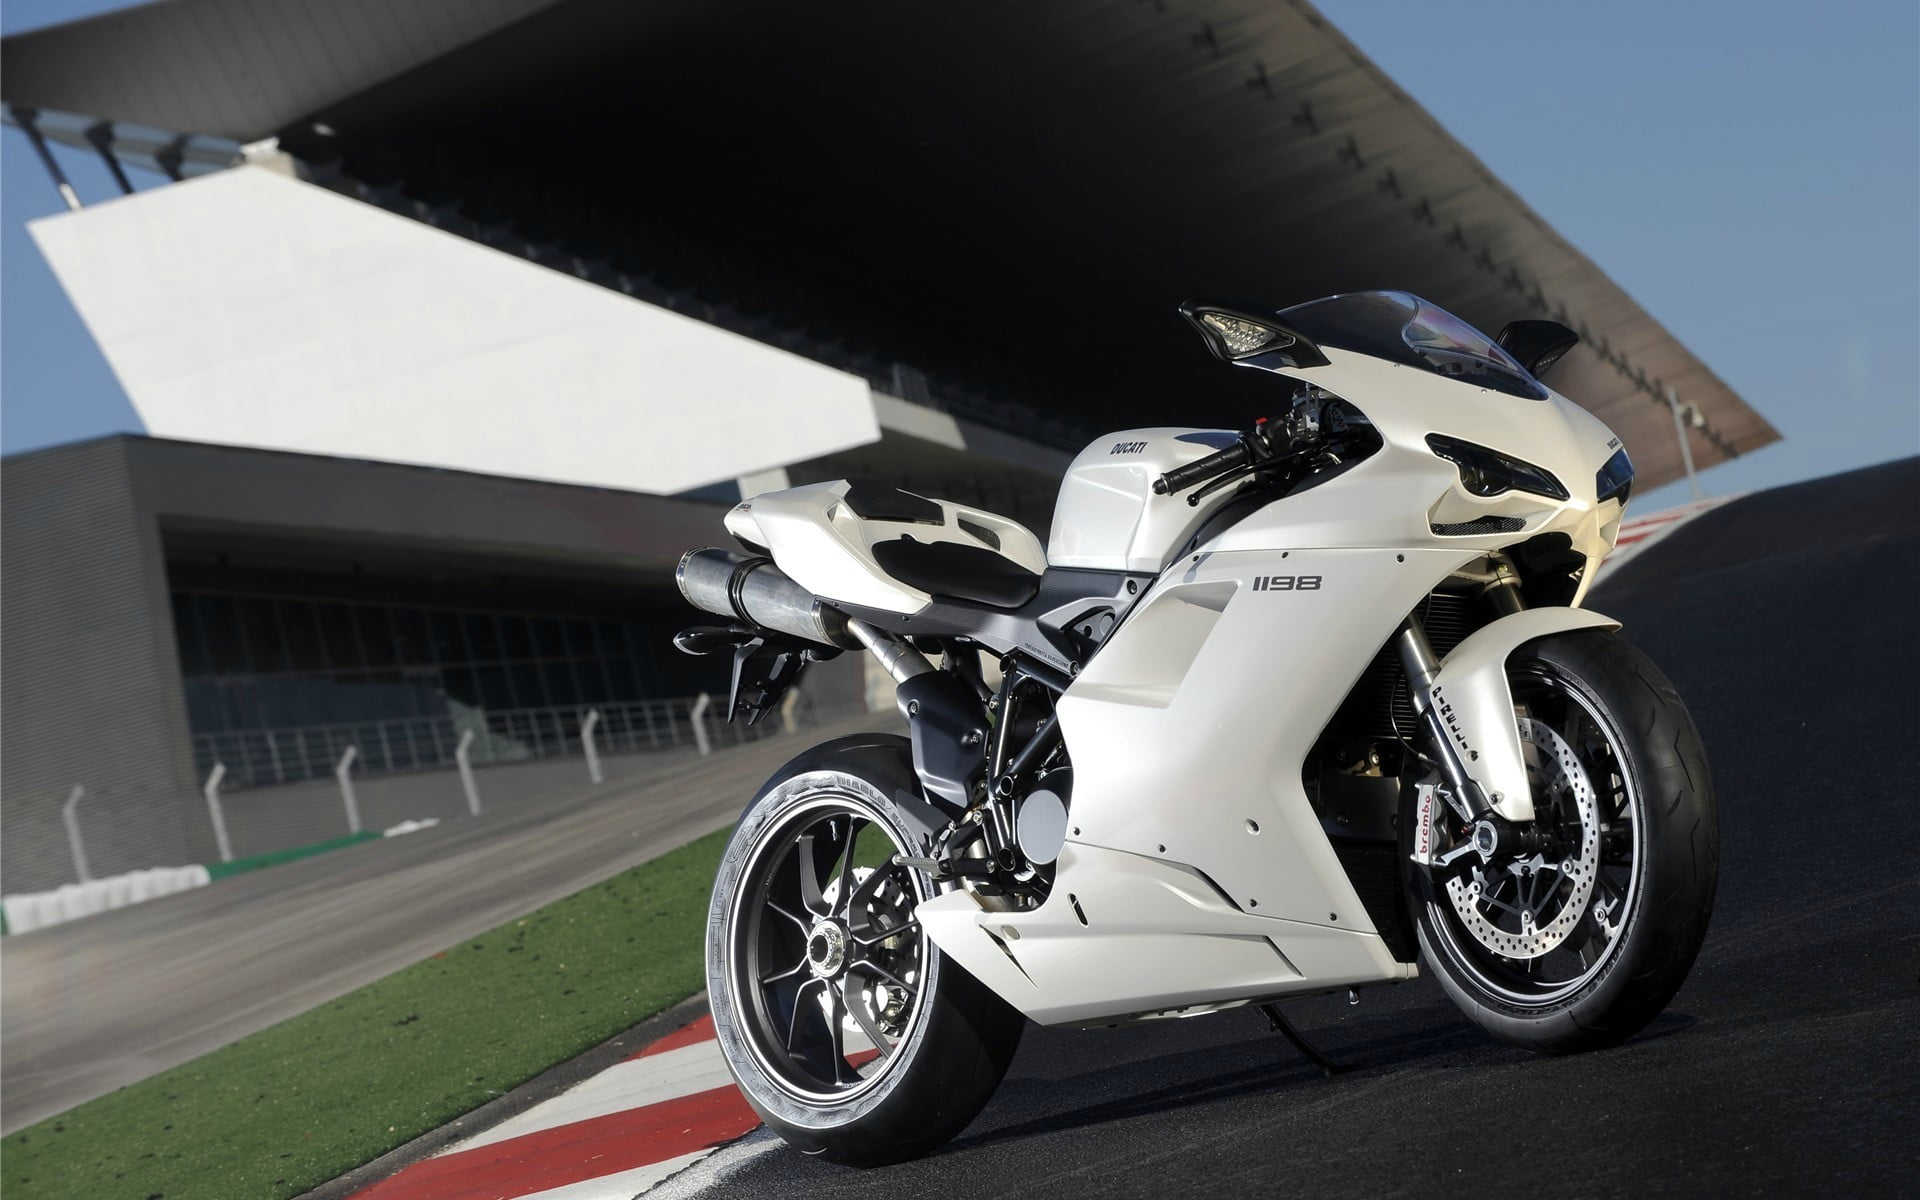 white and black sports bike, Ducati, Ducati 1198, superbike, transportation